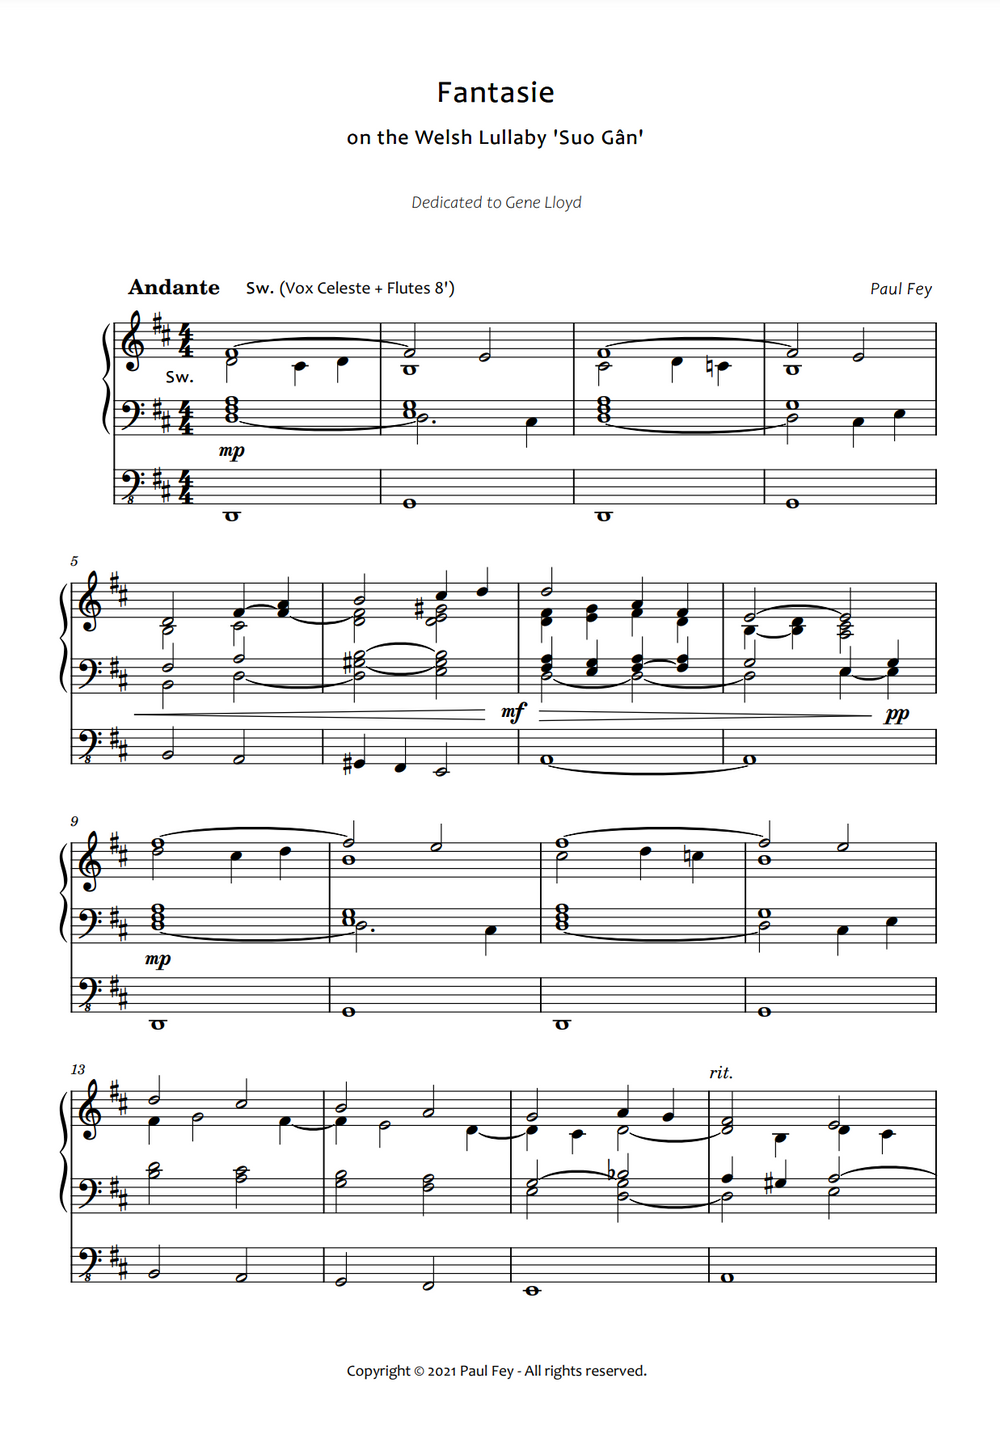 Fantasie on "Suo-Gan" (Sheet Music) - Music for Pipe Organ by Paul Fey